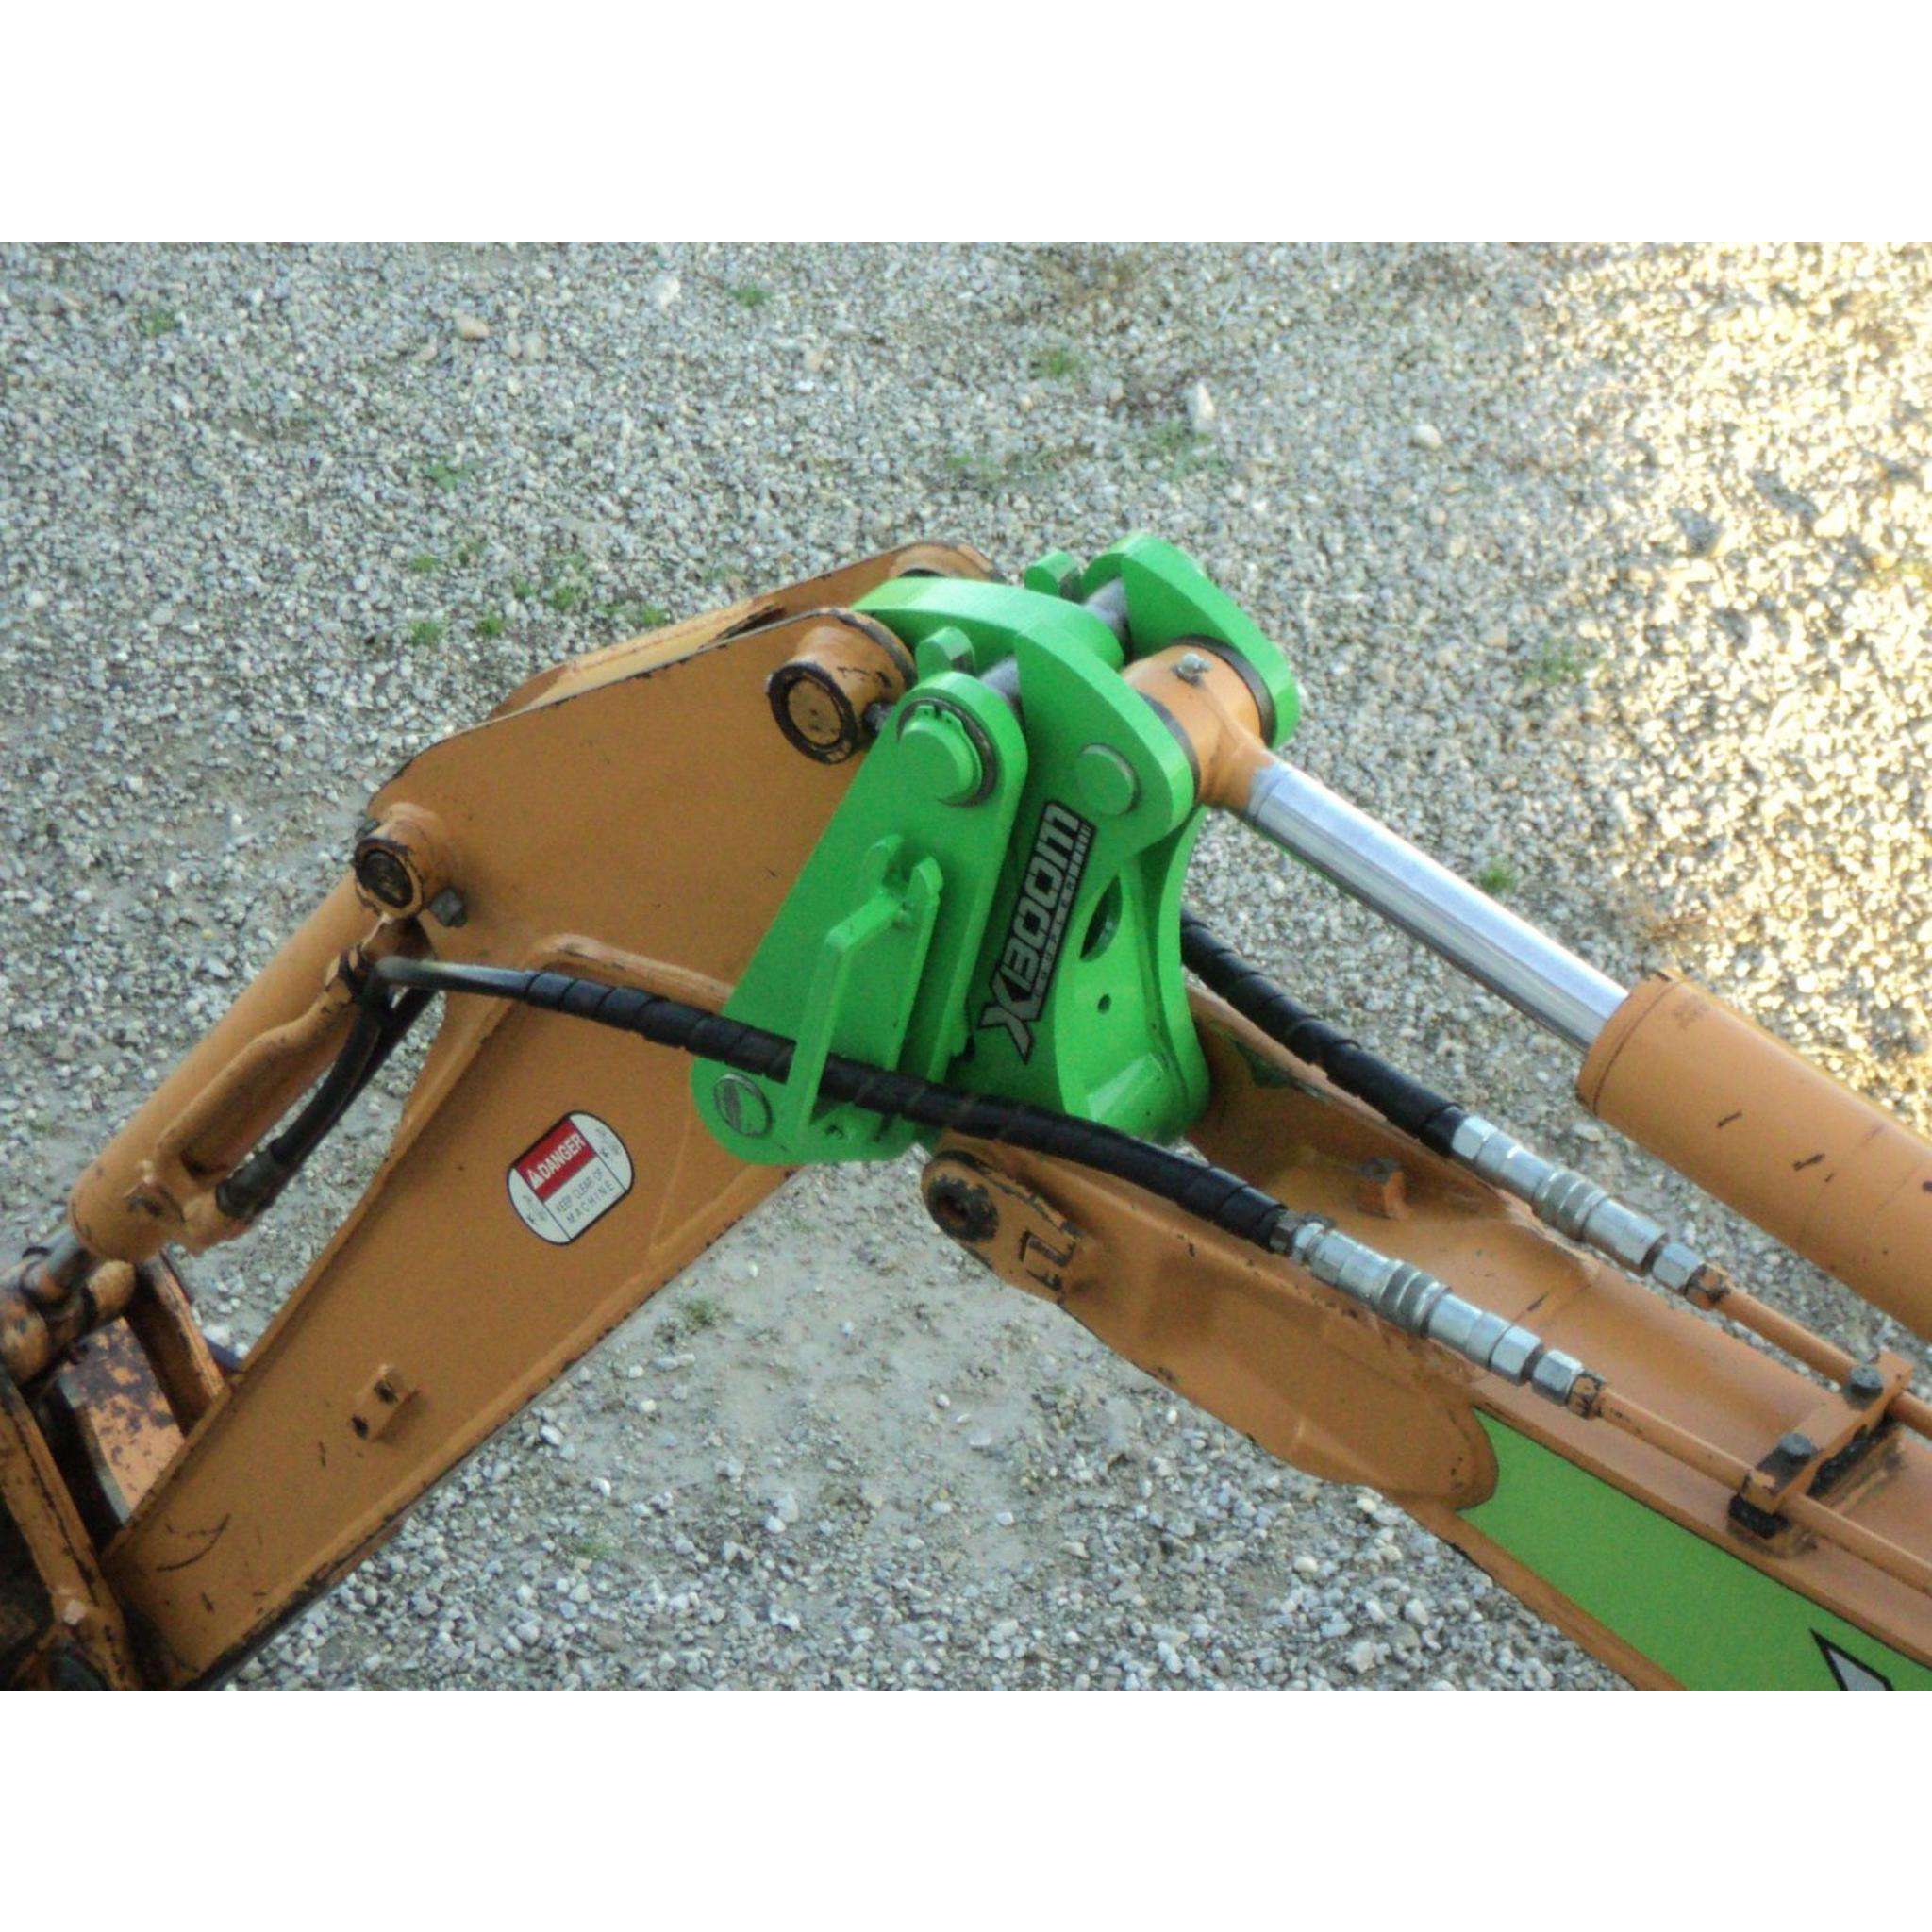 Amulet XBOOM Excavator To Skid Steer Adapter System